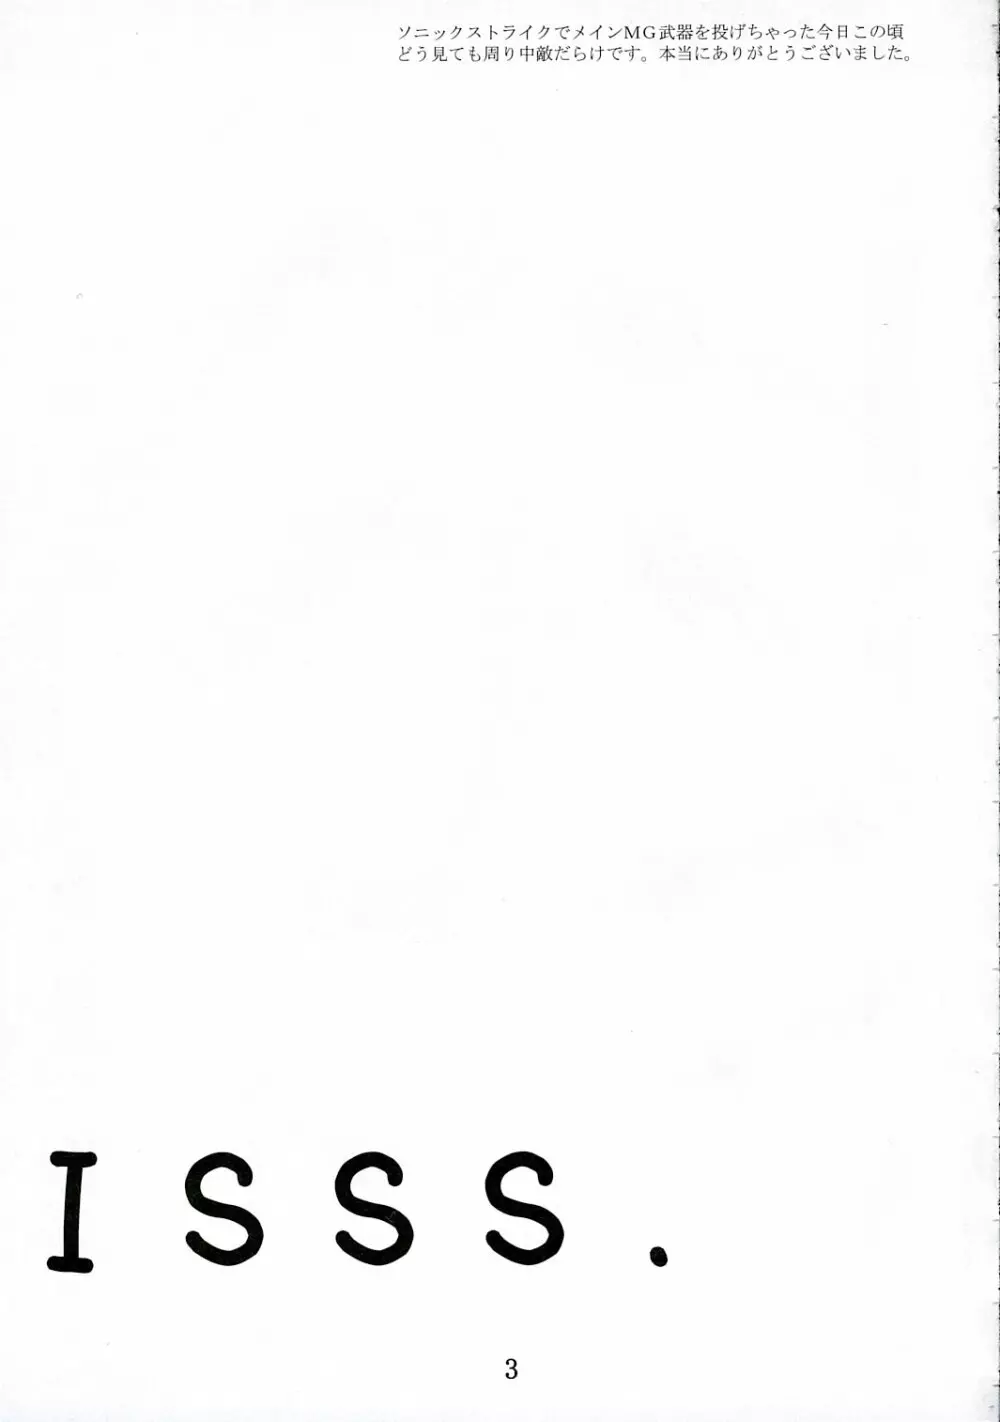 ISSS. 2ページ